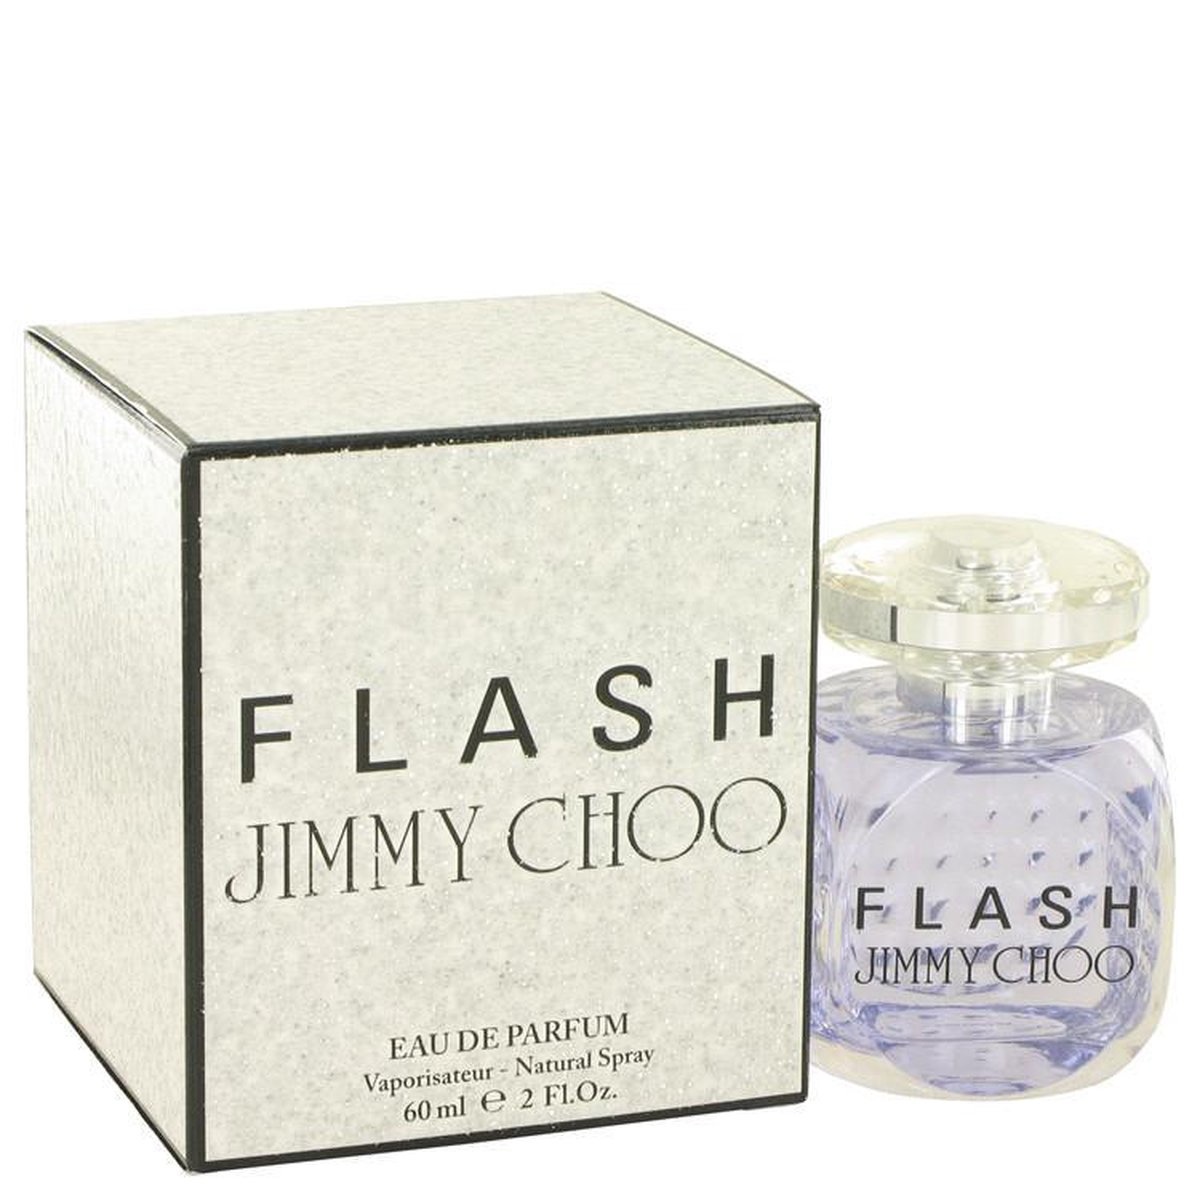 Jimmy Choo Flash for Women - 60 ml - Eau de Parfum